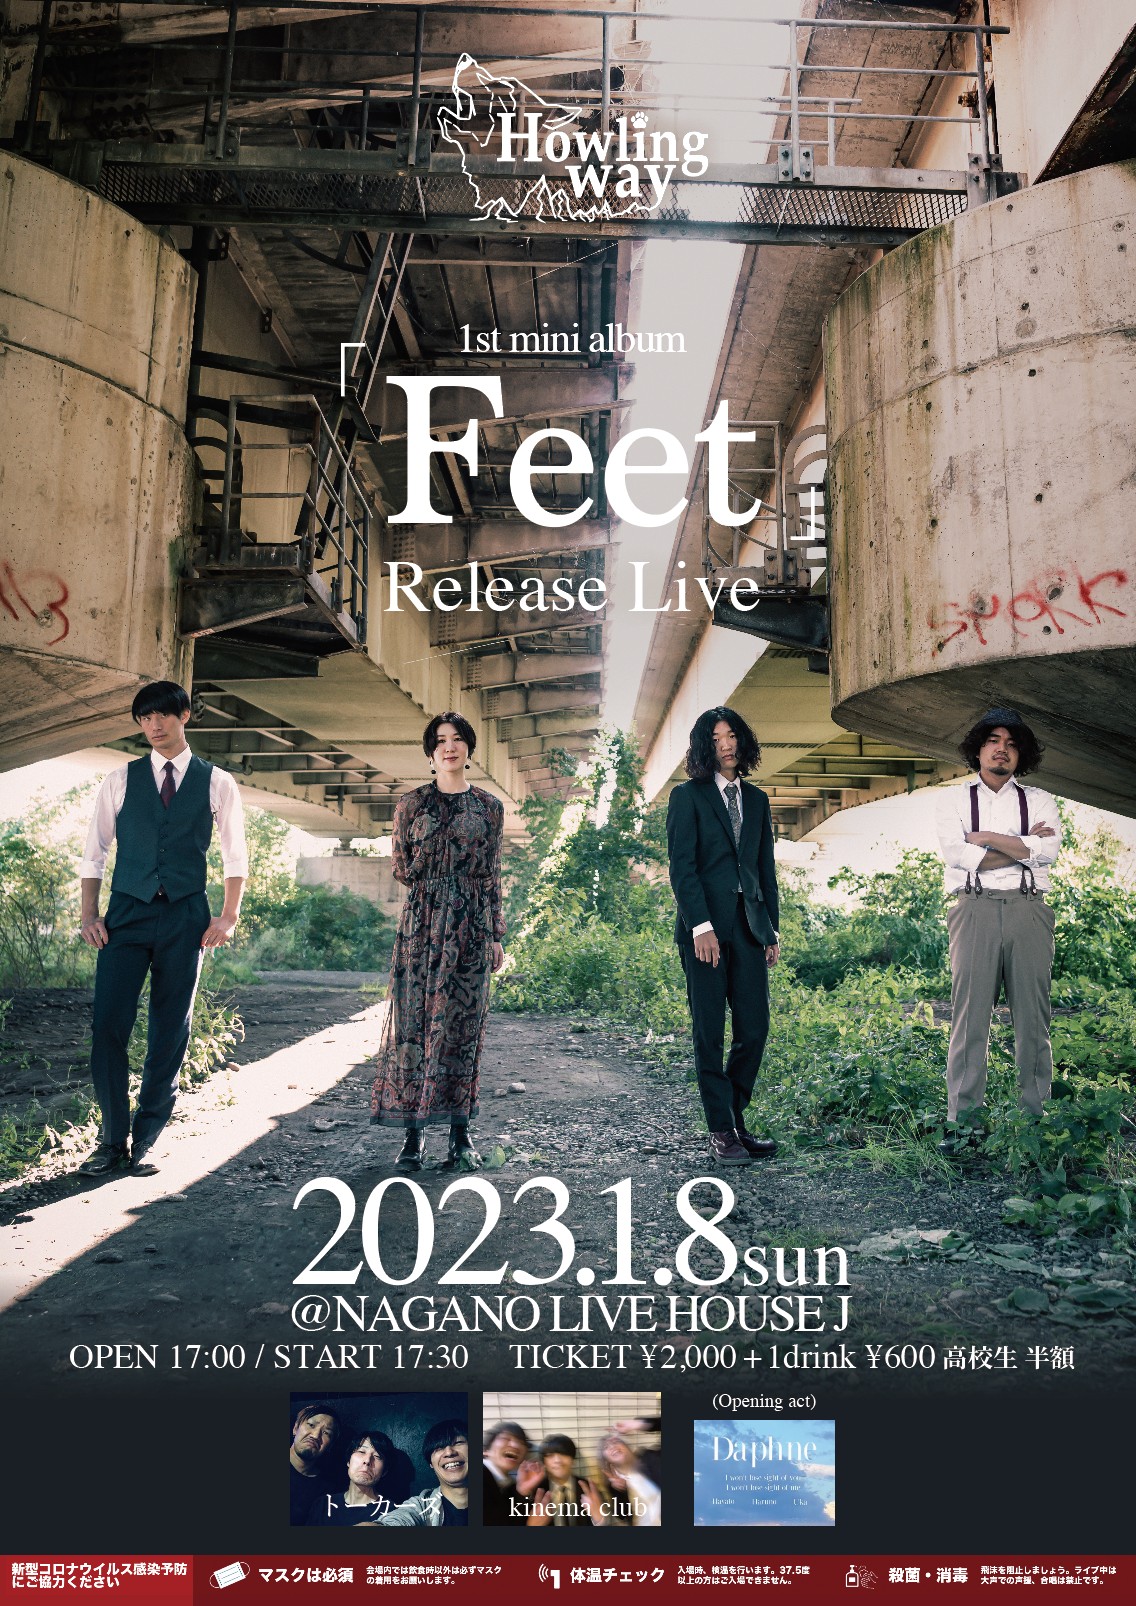 2023/01/08 1st mini album「Feet」Release Live